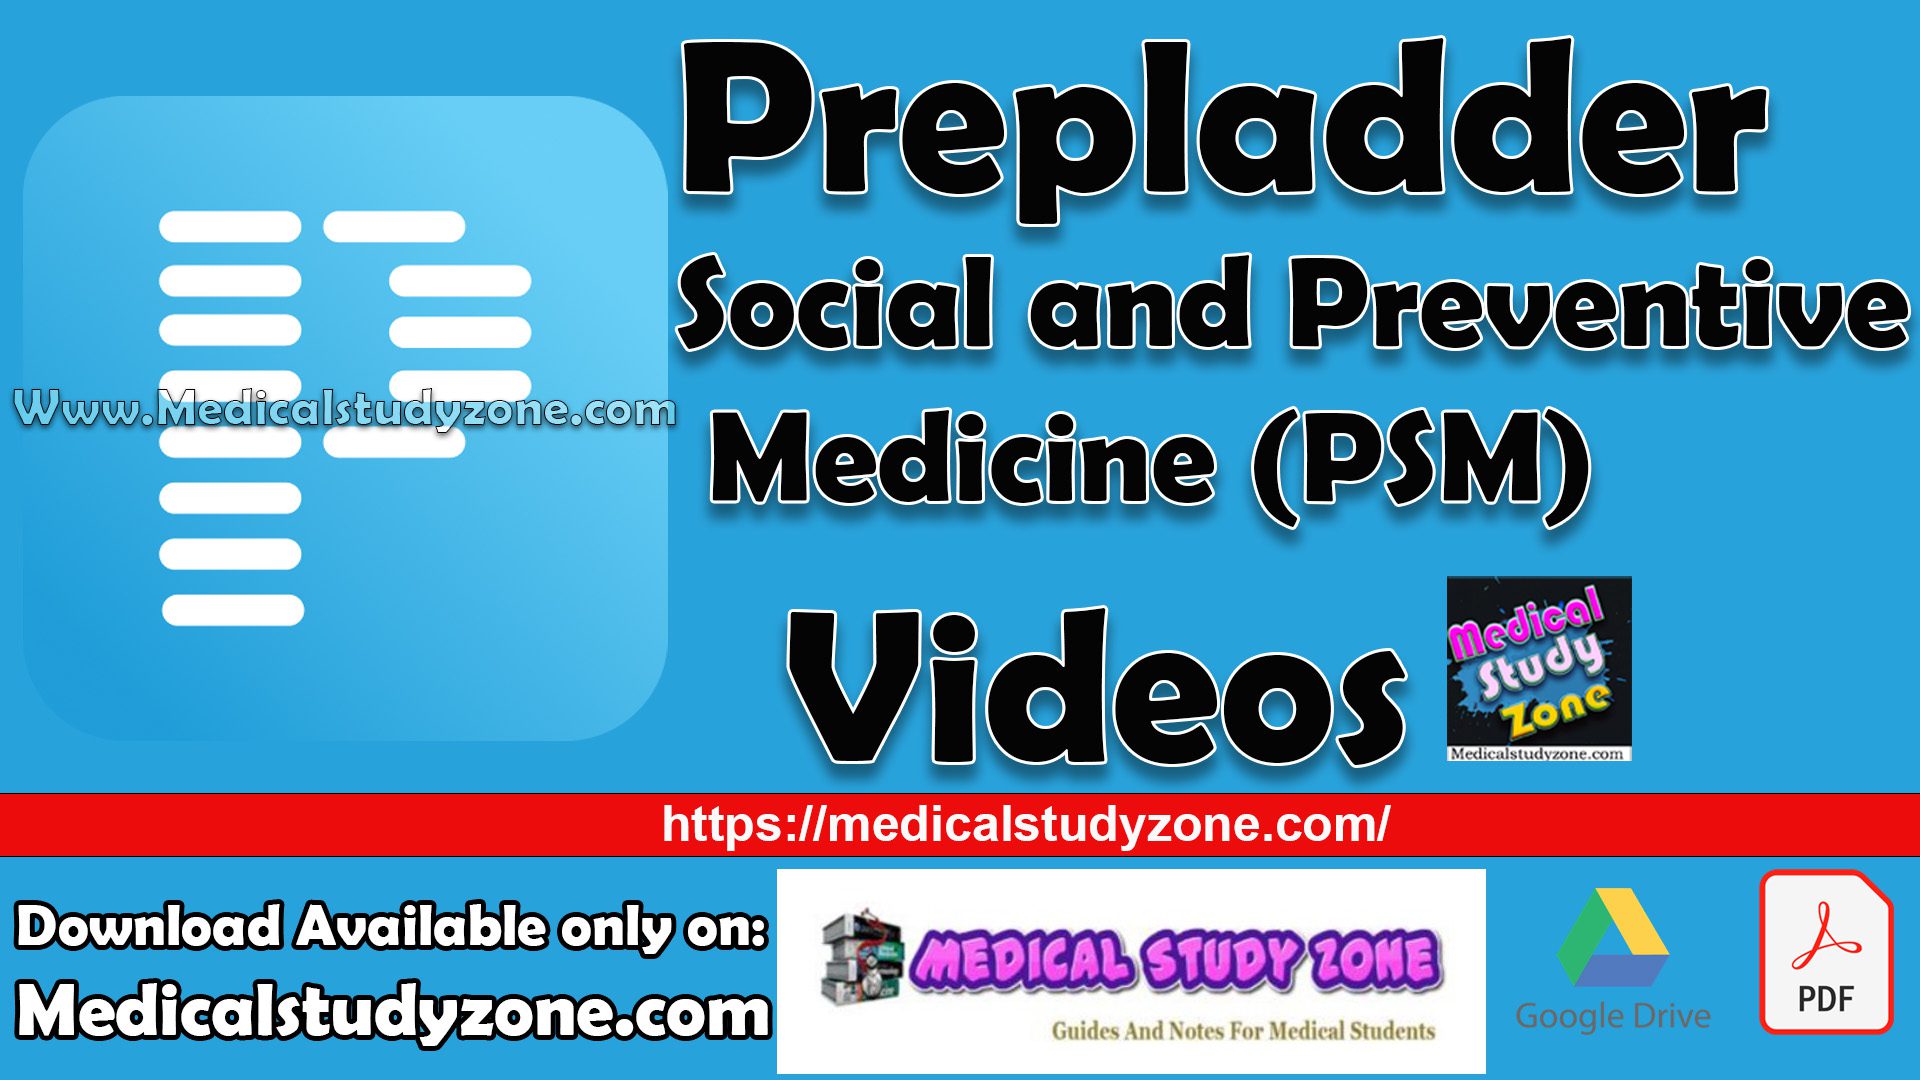 Prepladder Social and Preventive Medicine (PSM) Videos Free Download